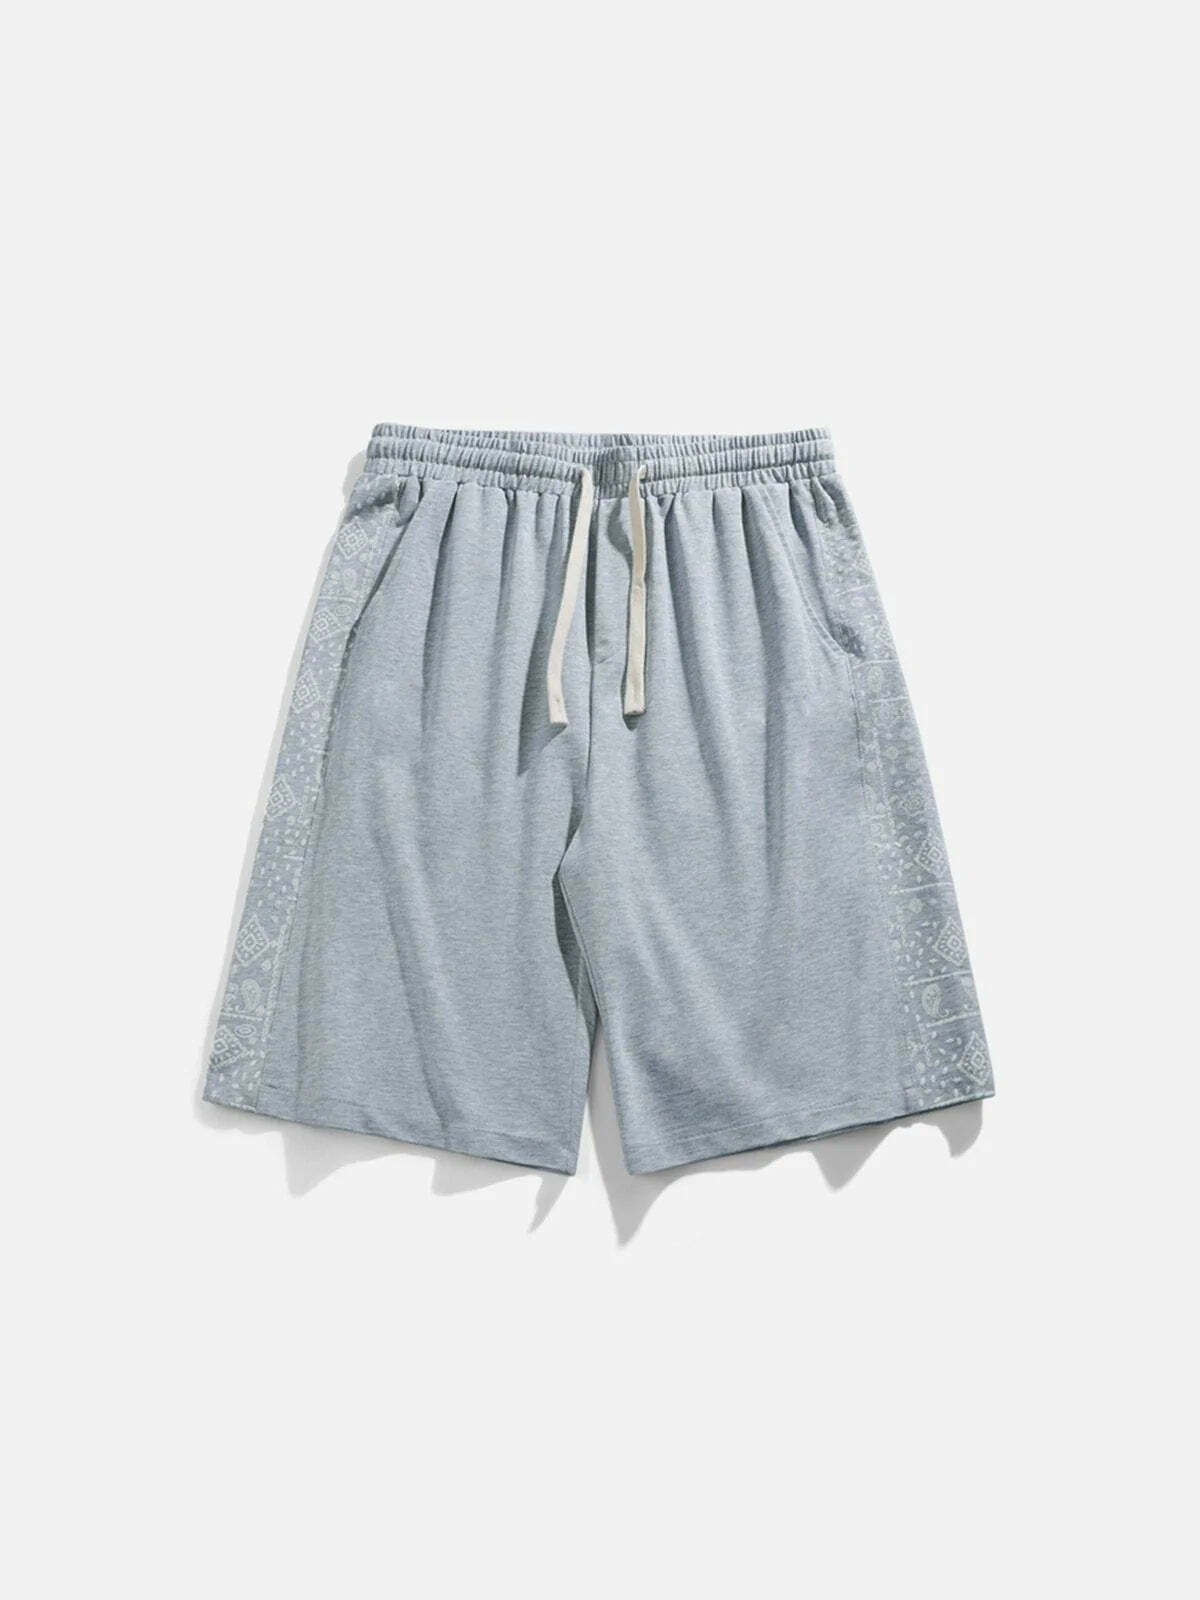 bandana print drawstring shorts edgy streetwear essential 5300